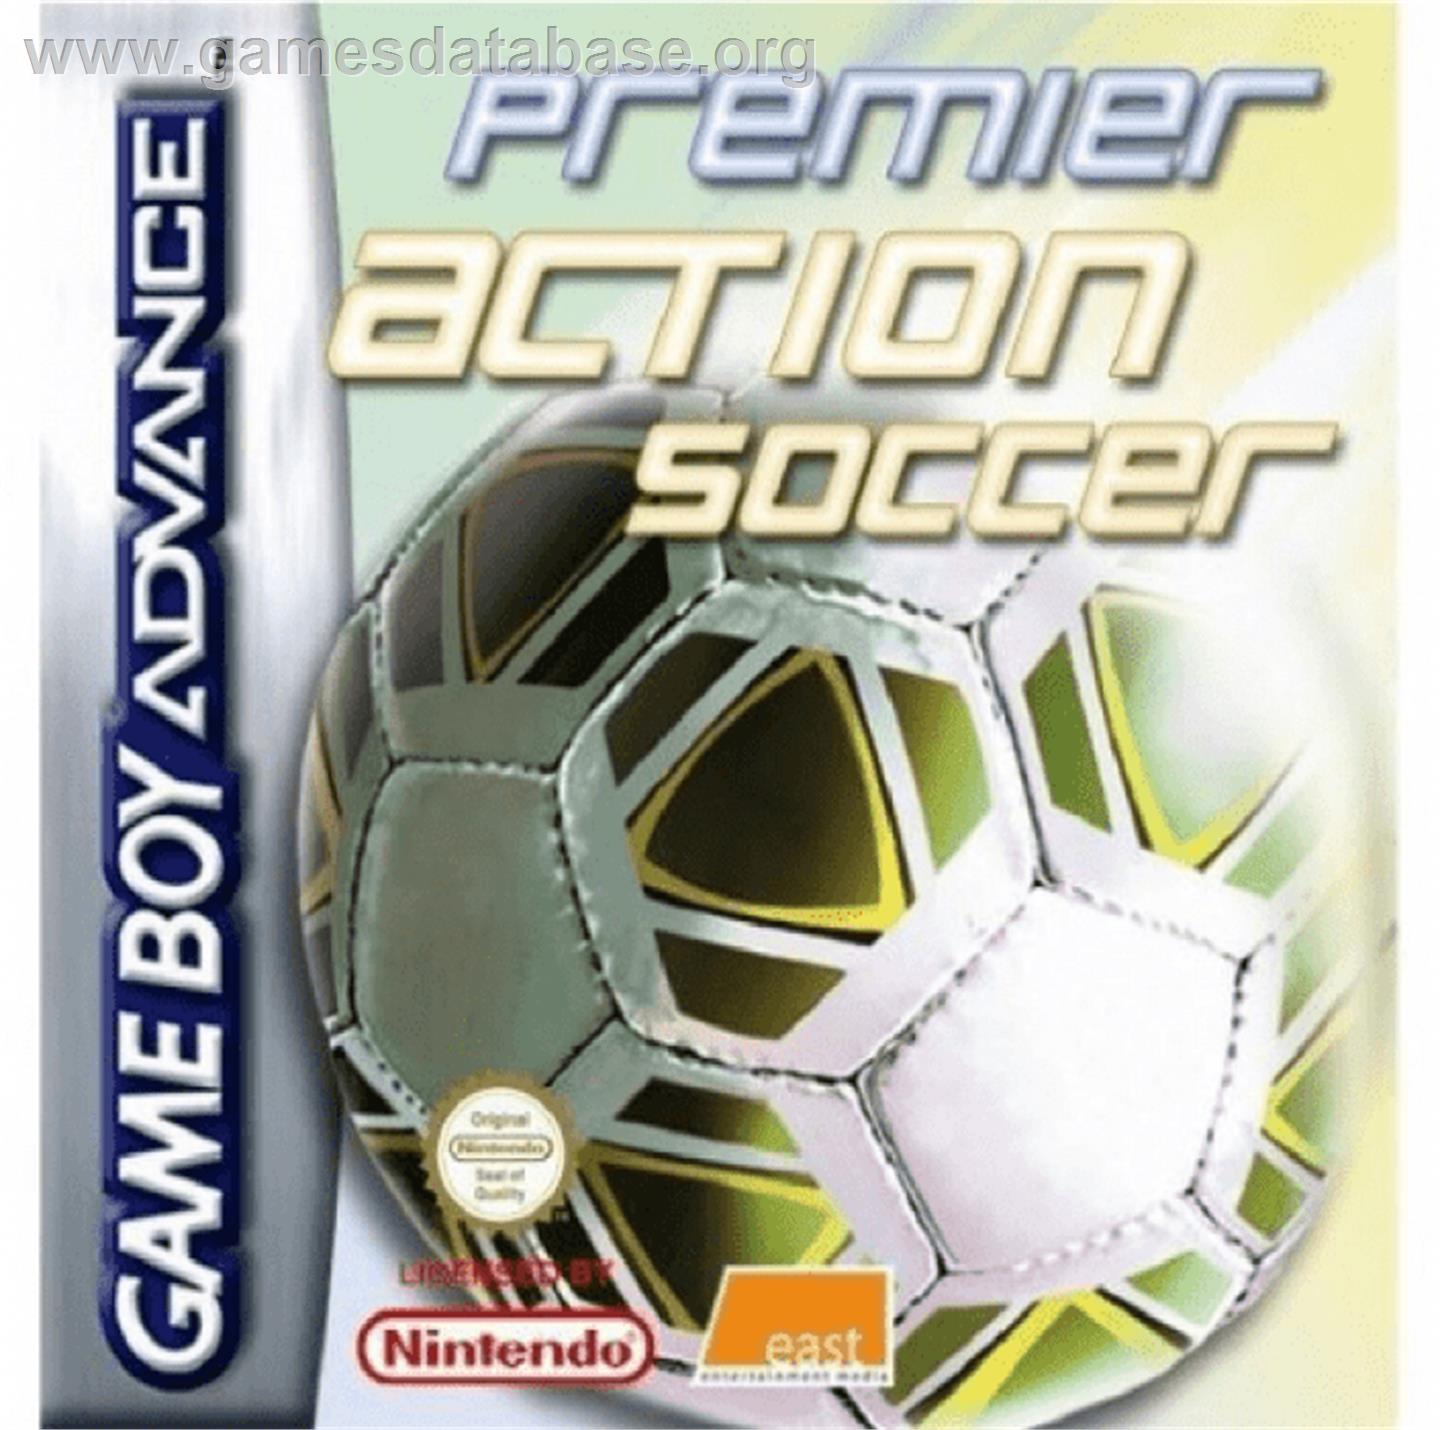 Premier Action Soccer - Nintendo Game Boy Advance - Artwork - Box